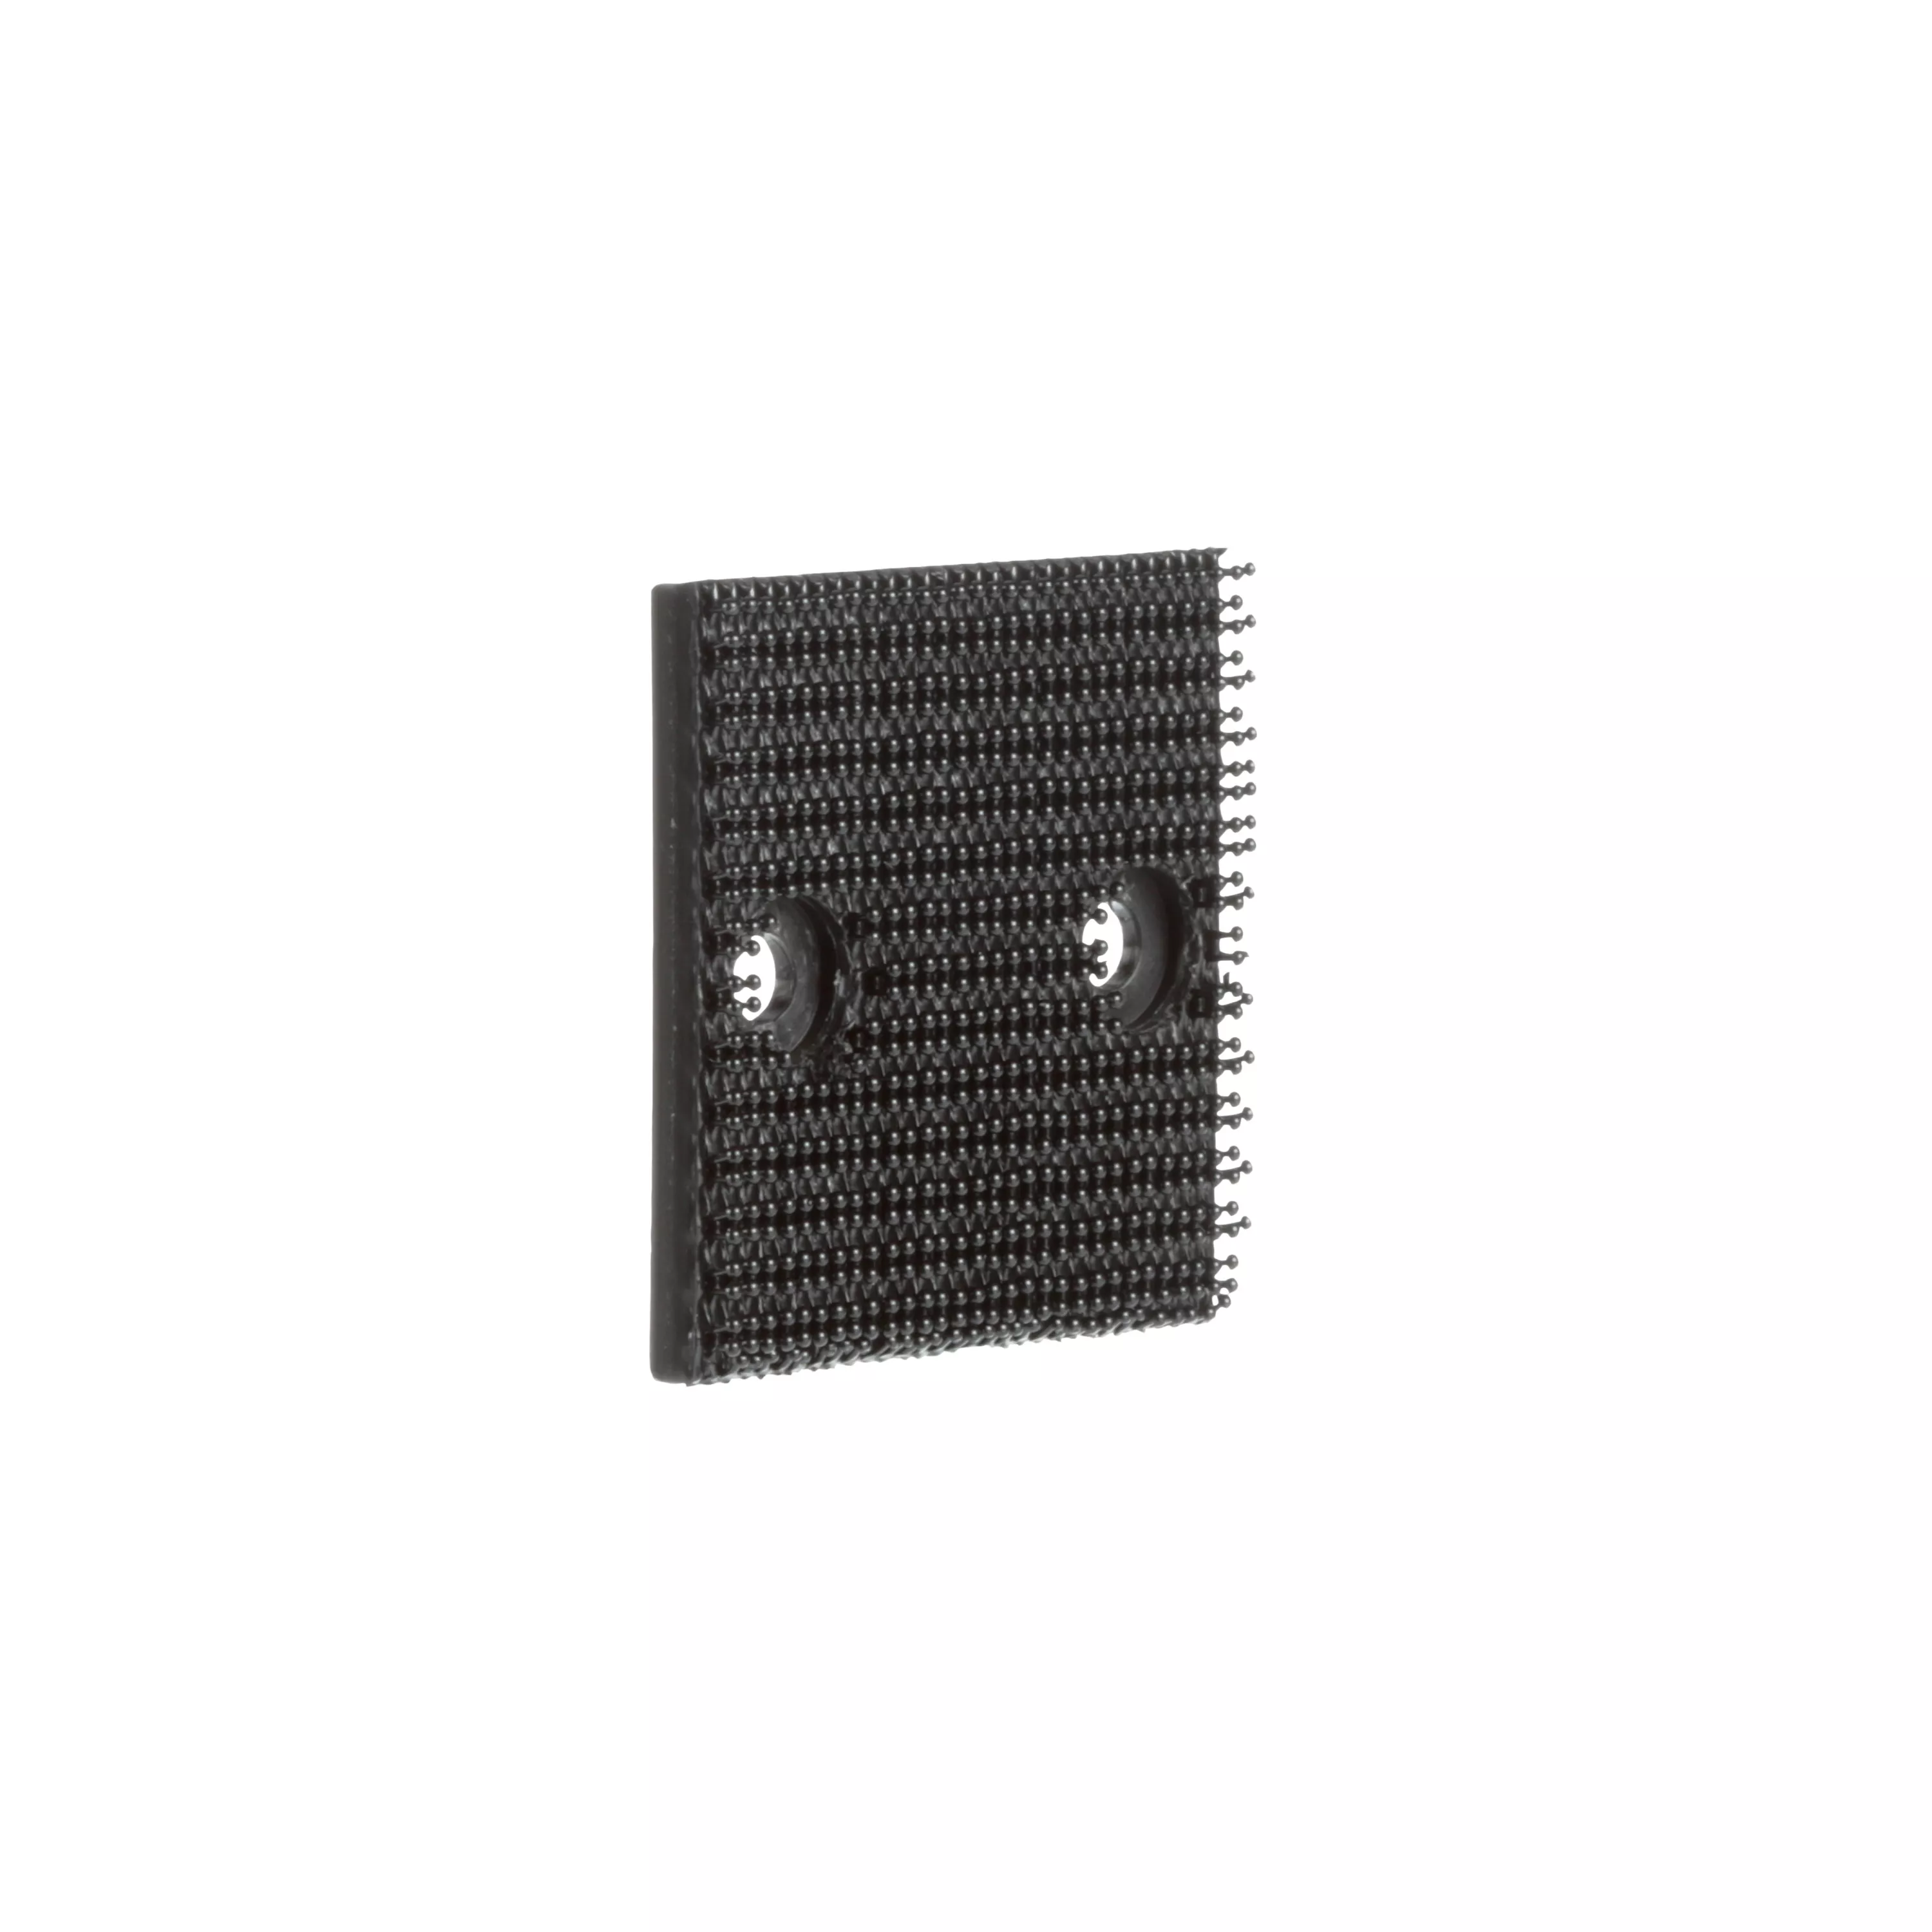 3M™ Dual Lock™ Reclosable Fastener SJ3252, Stem Density 400, Black, 1000
Piece/Case, Die Cut